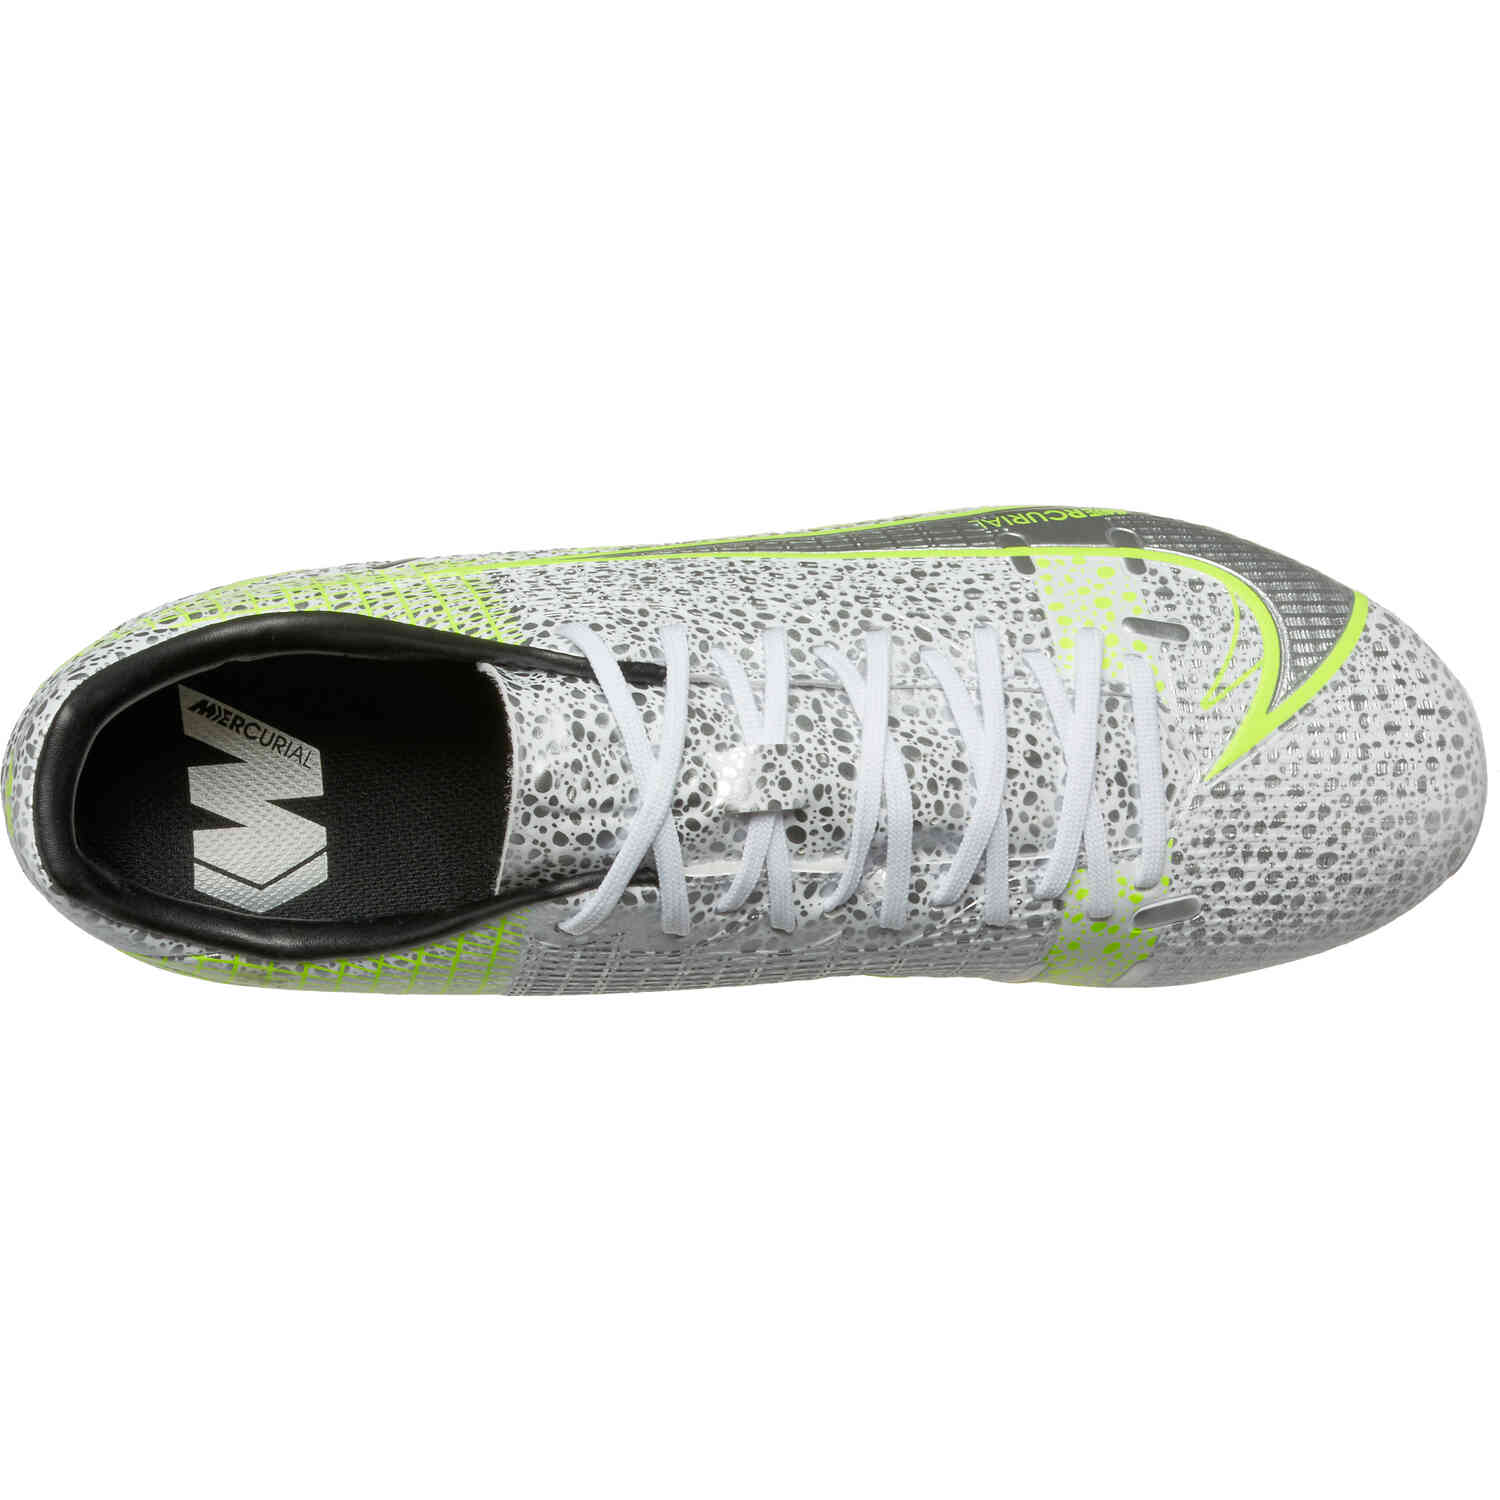 Shop The Nike Mercurial Vapor 14 Elite SG-PRO Silver Safari CR7 -  White/Black/Metallic Silver/Volt